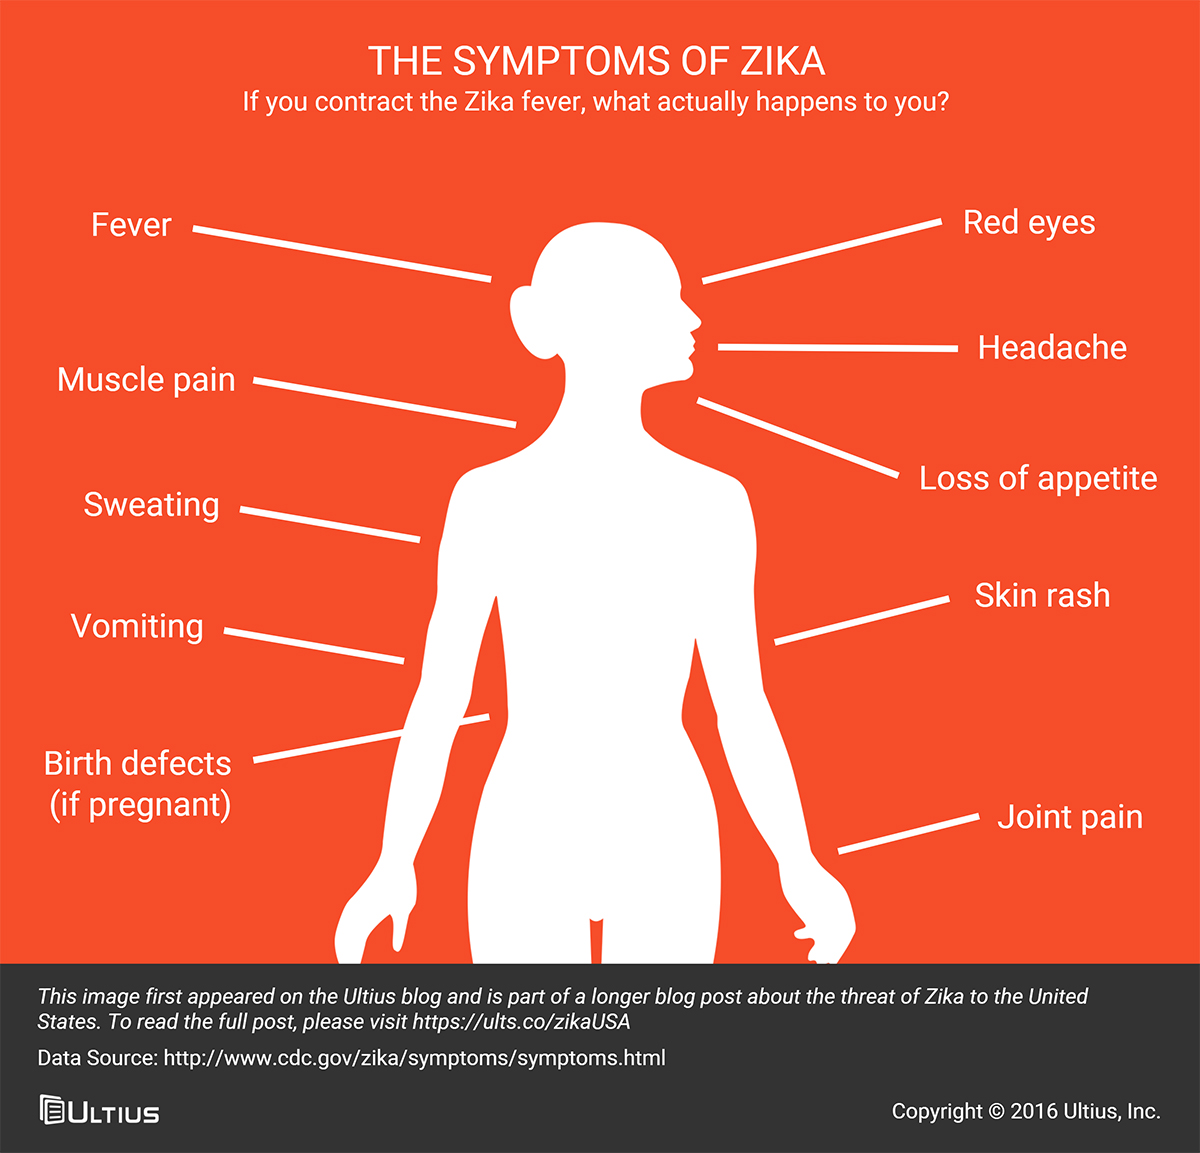 Physical symptoms of the Zika virus